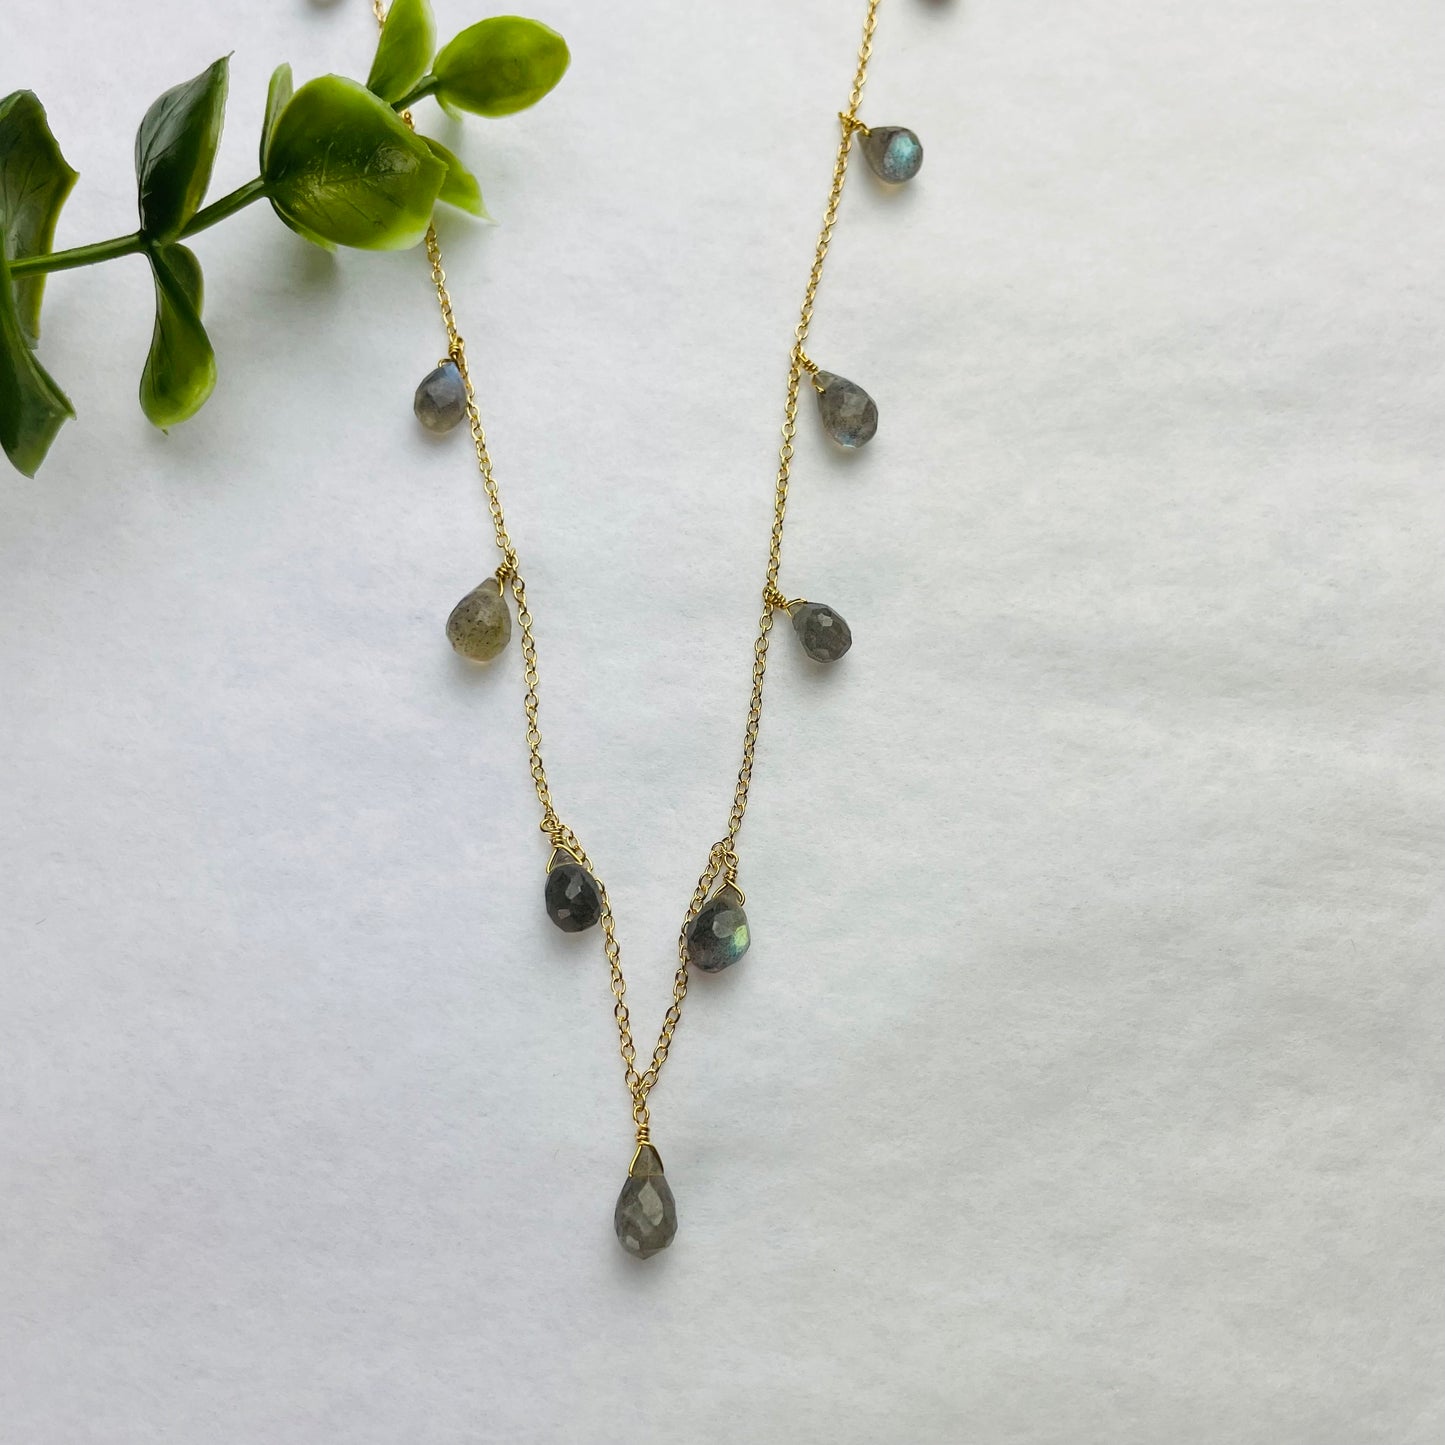 Treisi Jewelry 24k Gold Vermeil Drop Necklace - Multiple Stones